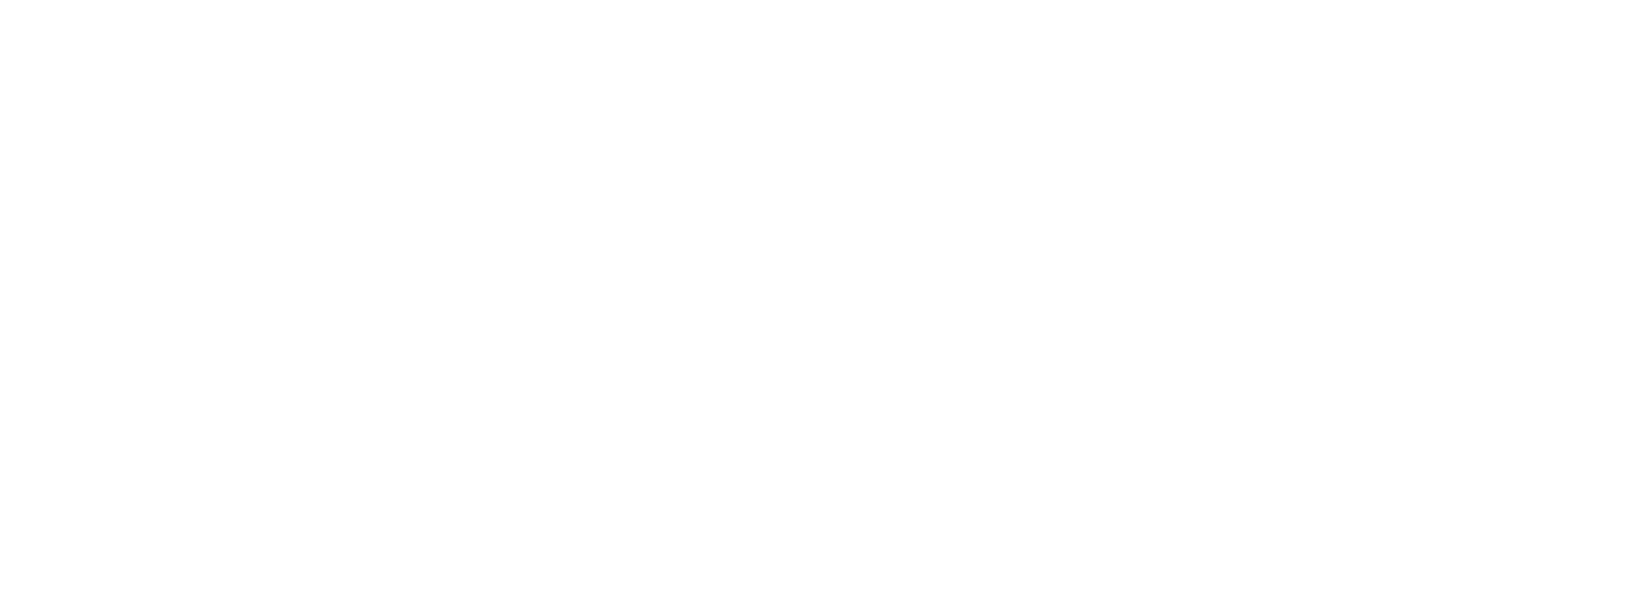 Gerry Grossman Seminars